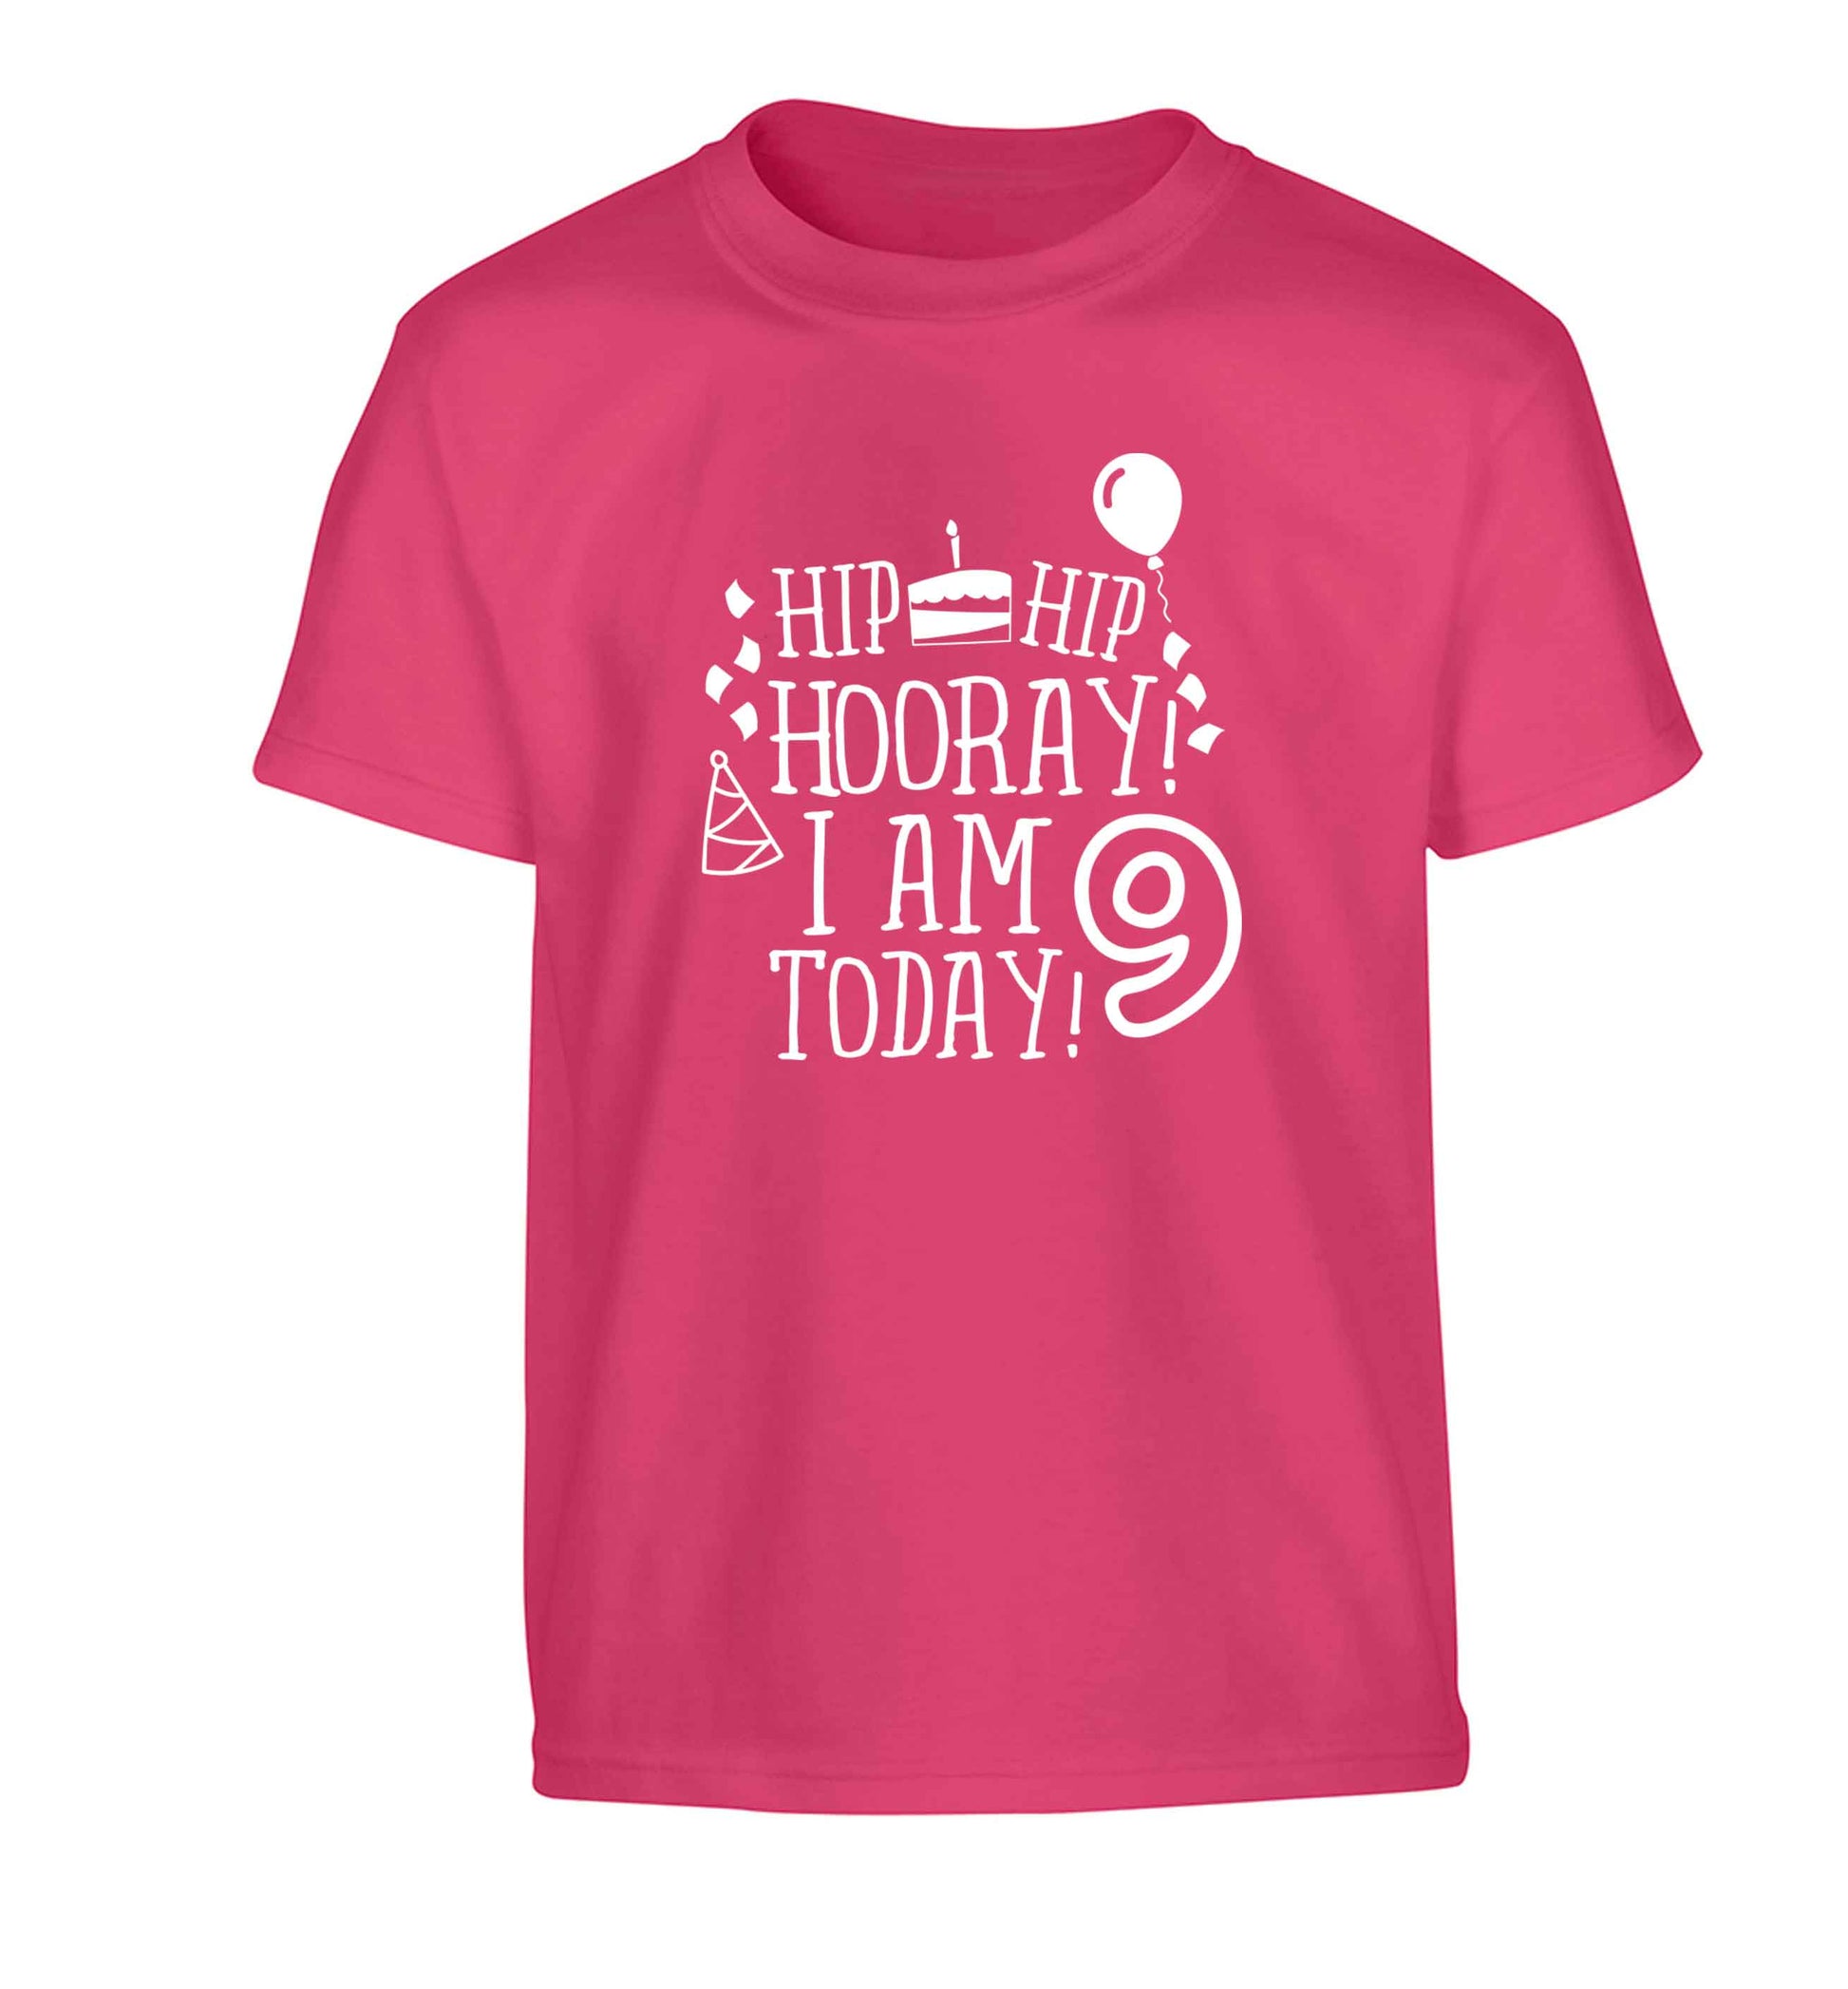 Hip hip hooray I am 9 today! Children's pink Tshirt 12-13 Years